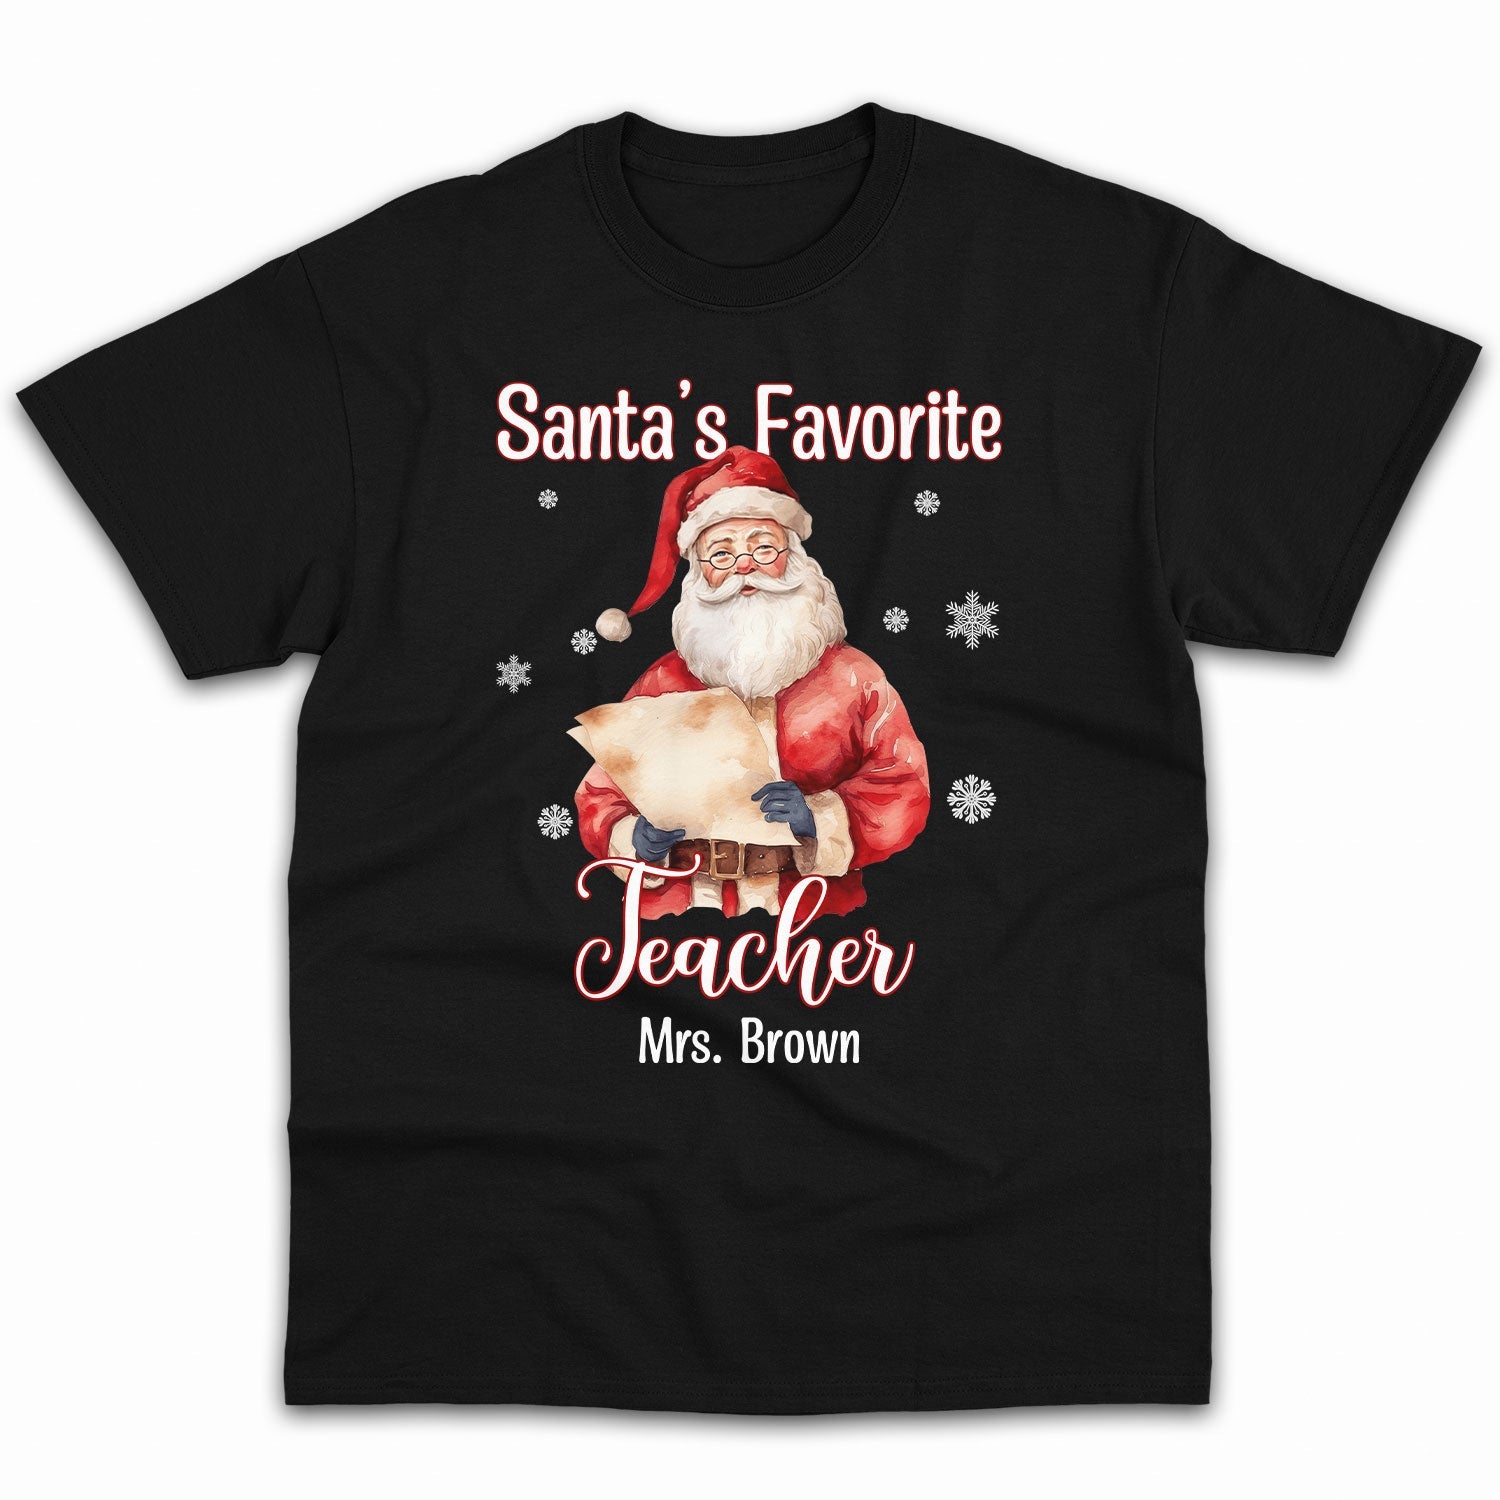 Santa's Favorite Teacher - Personalized Christmas gift for Teacher - Custom Tshirt - MyMindfulGifts